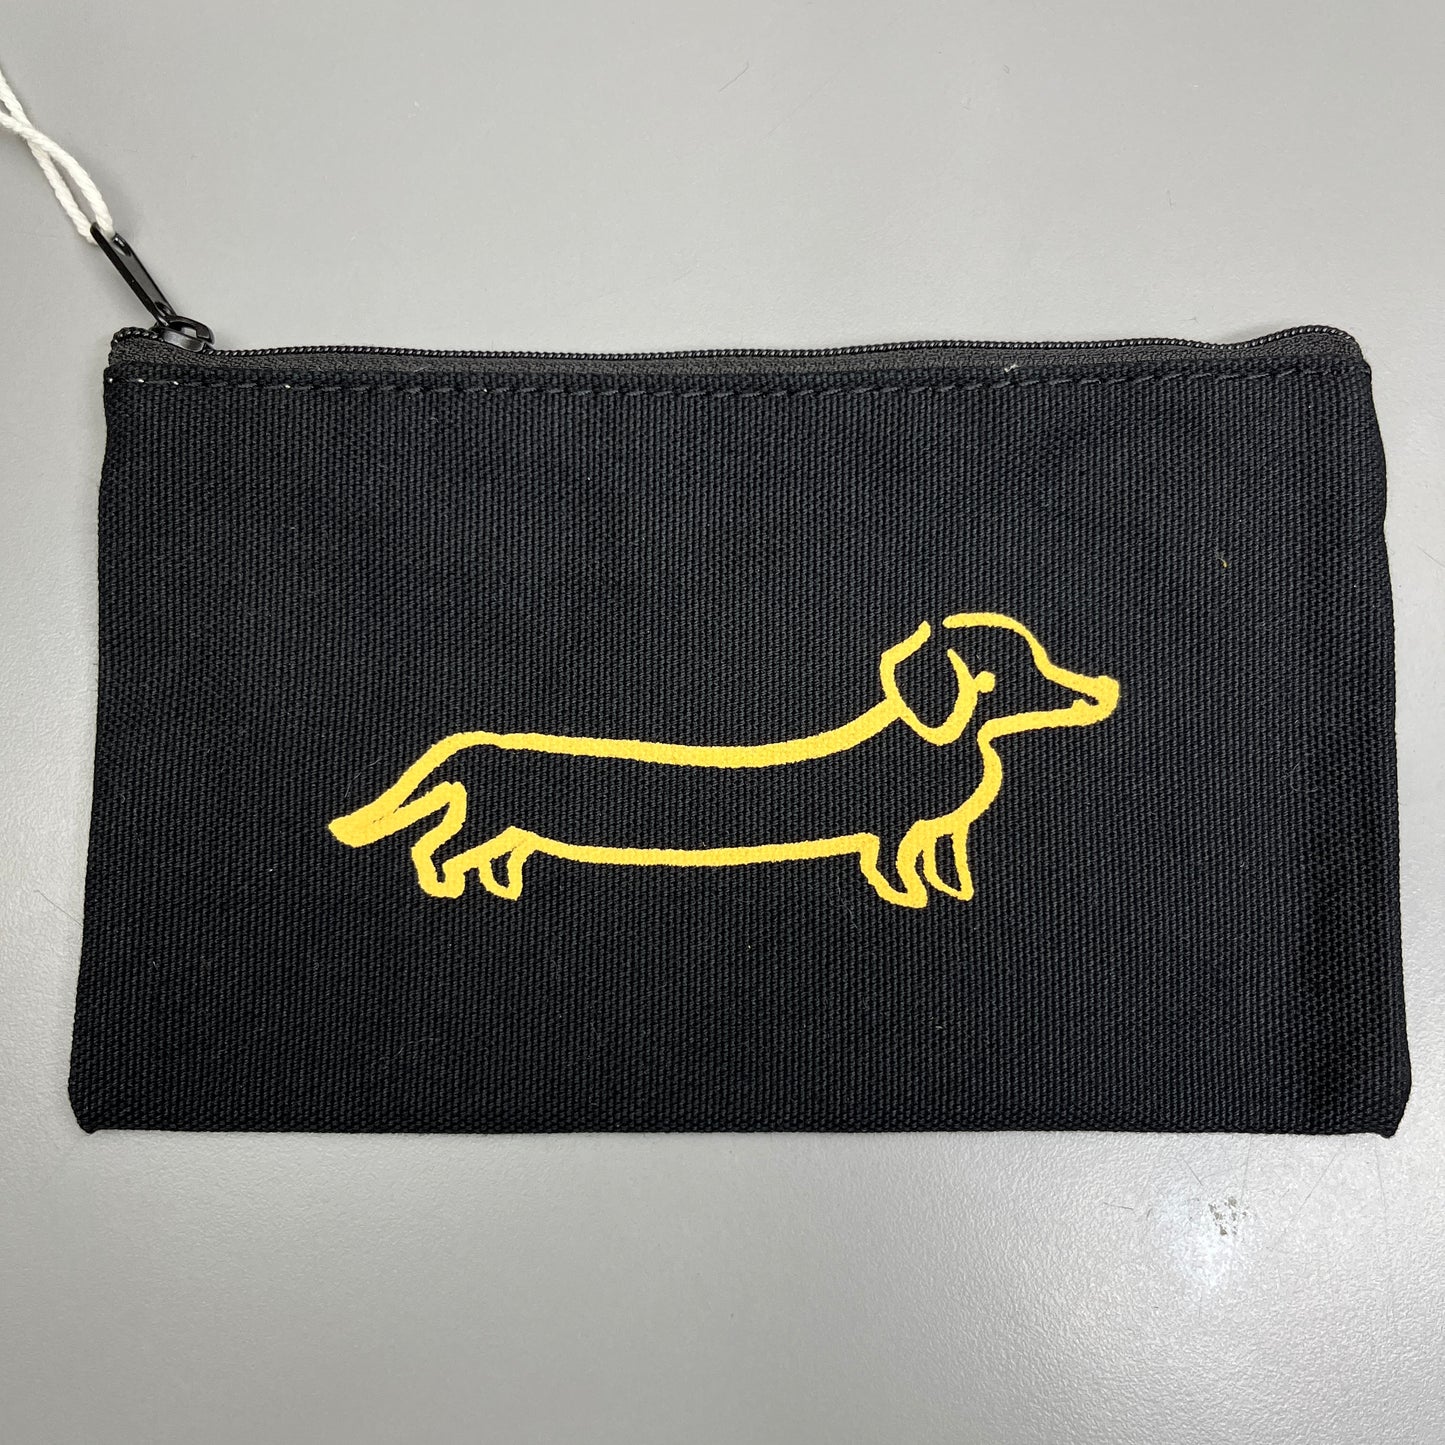 DANICA JUBILEE Reusable Dog Park Snack Bag Set 7"x 7.5" Orange/Black 3364034 (New)